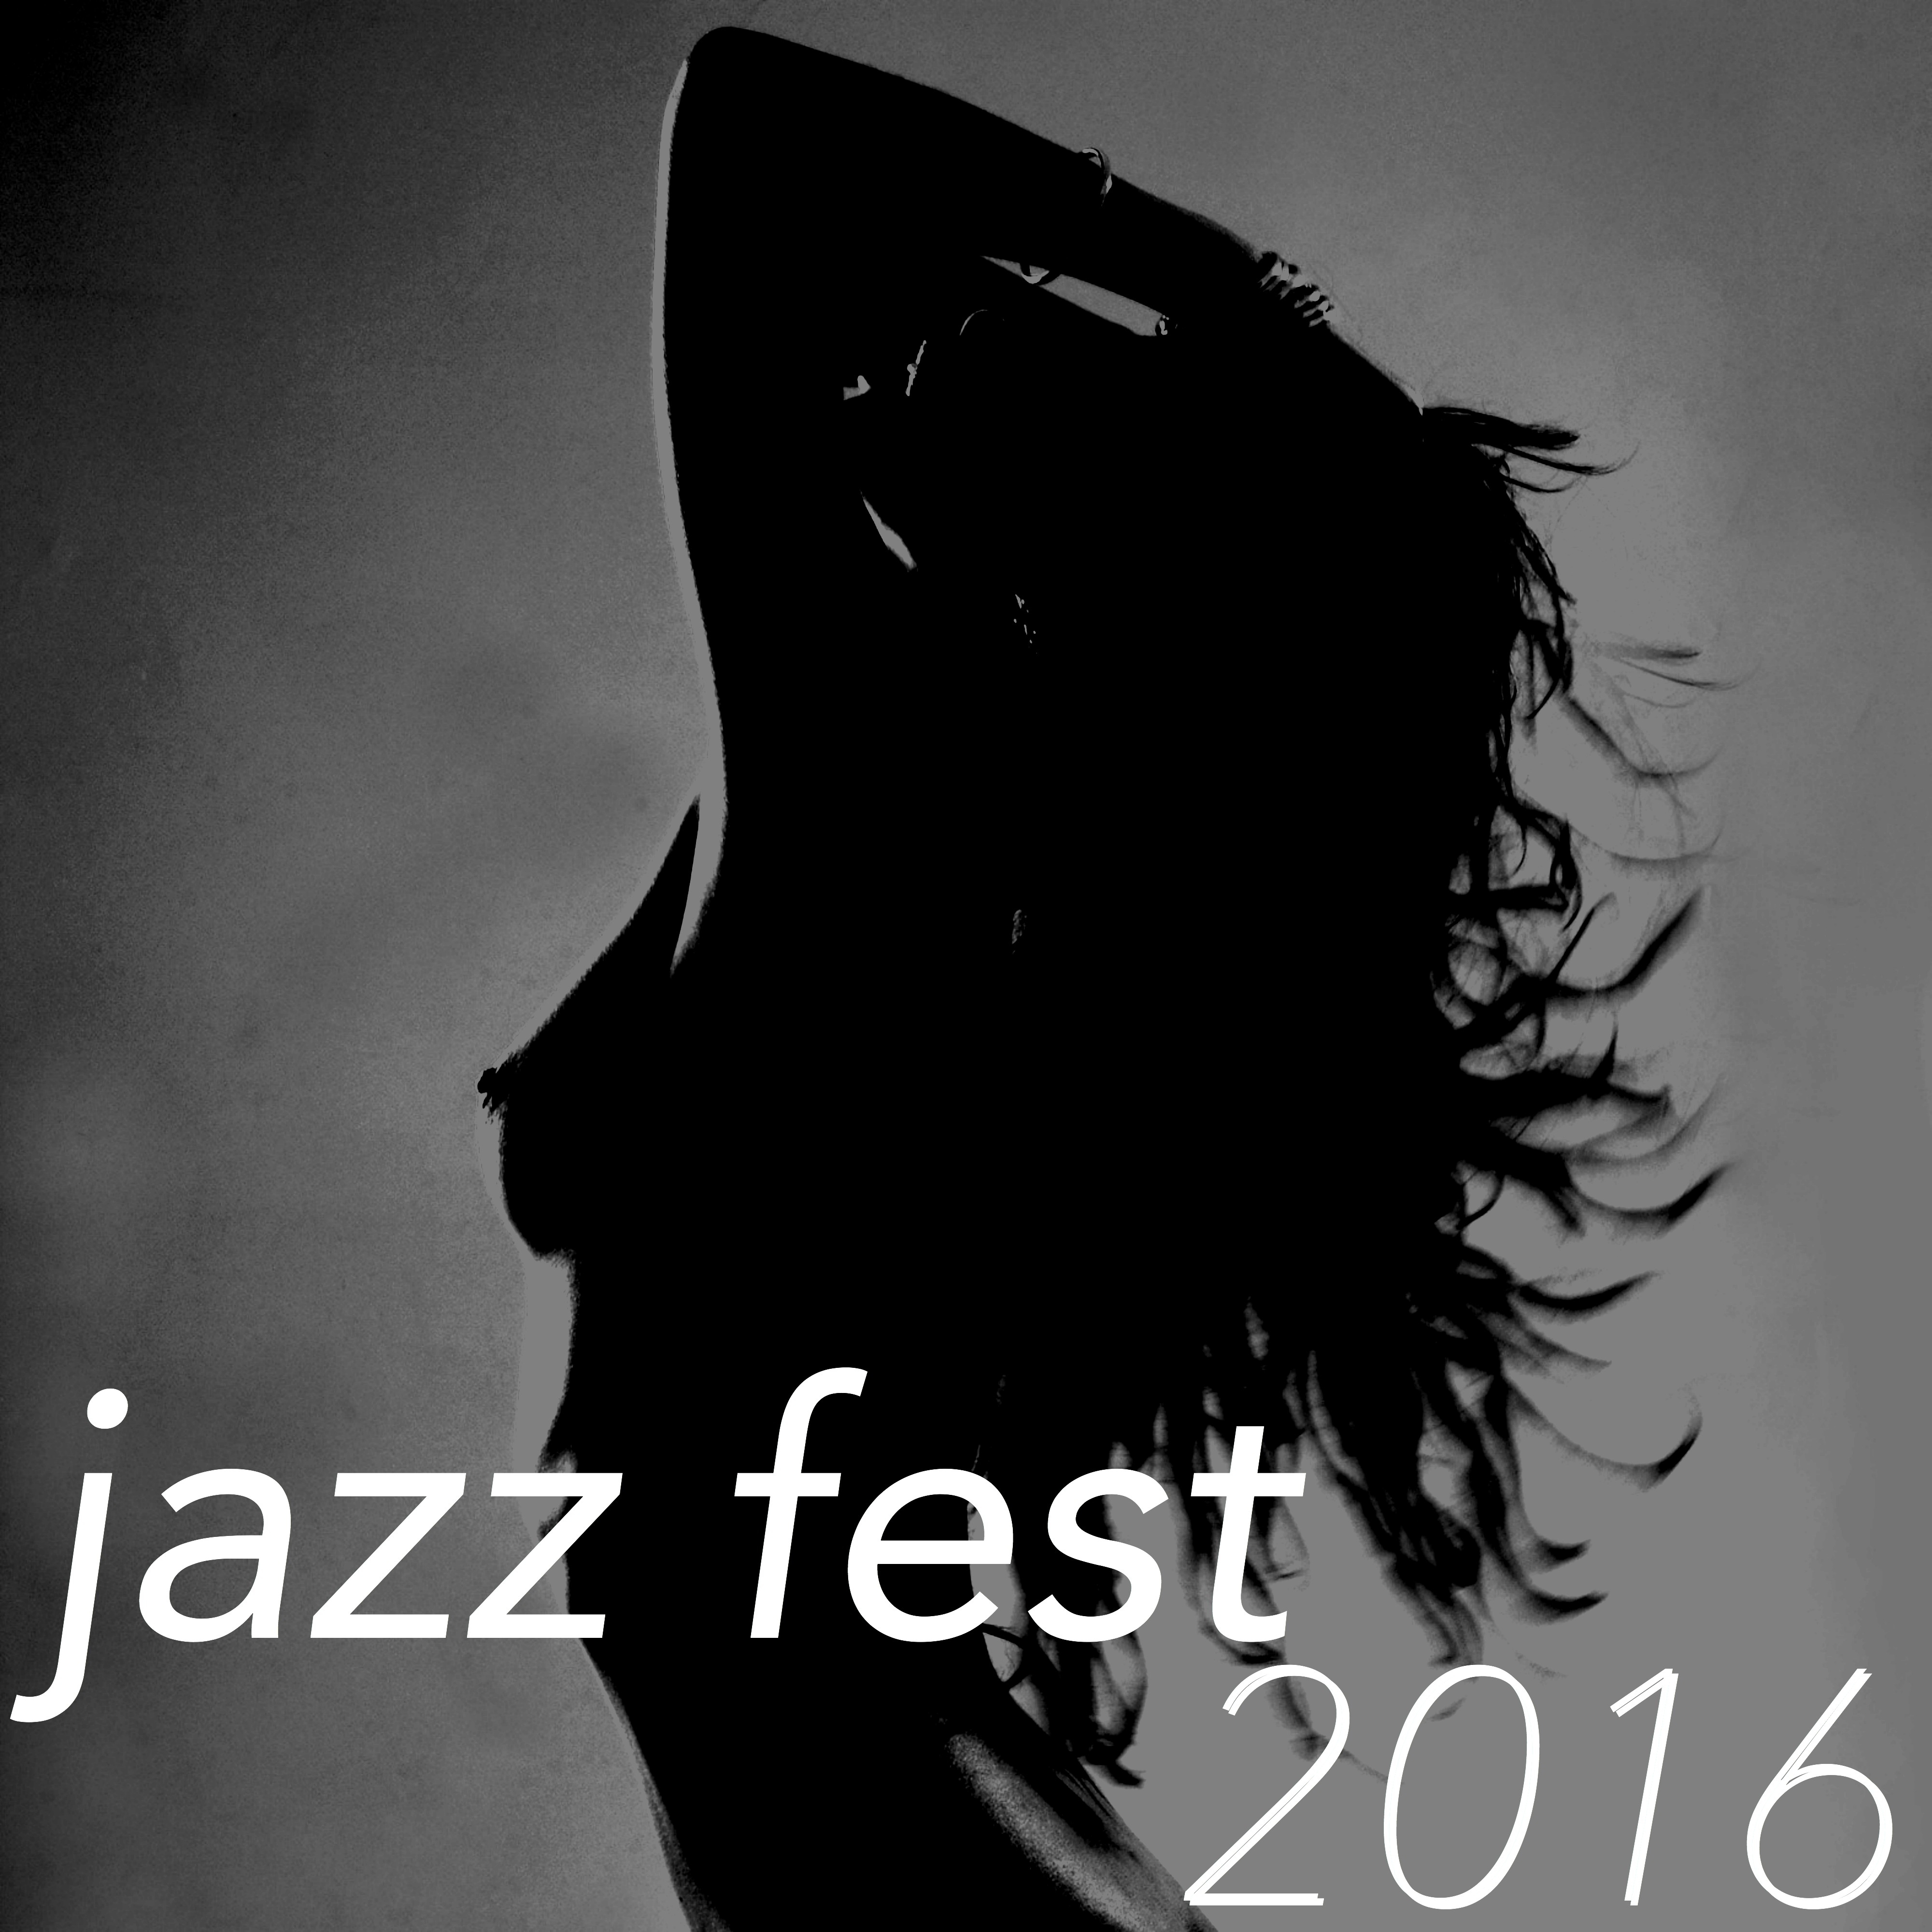 Jazz Fest 2016 – Acid Jazz DJ Collection, Bossanova, Cocktail Party Music & Smooth Jazz